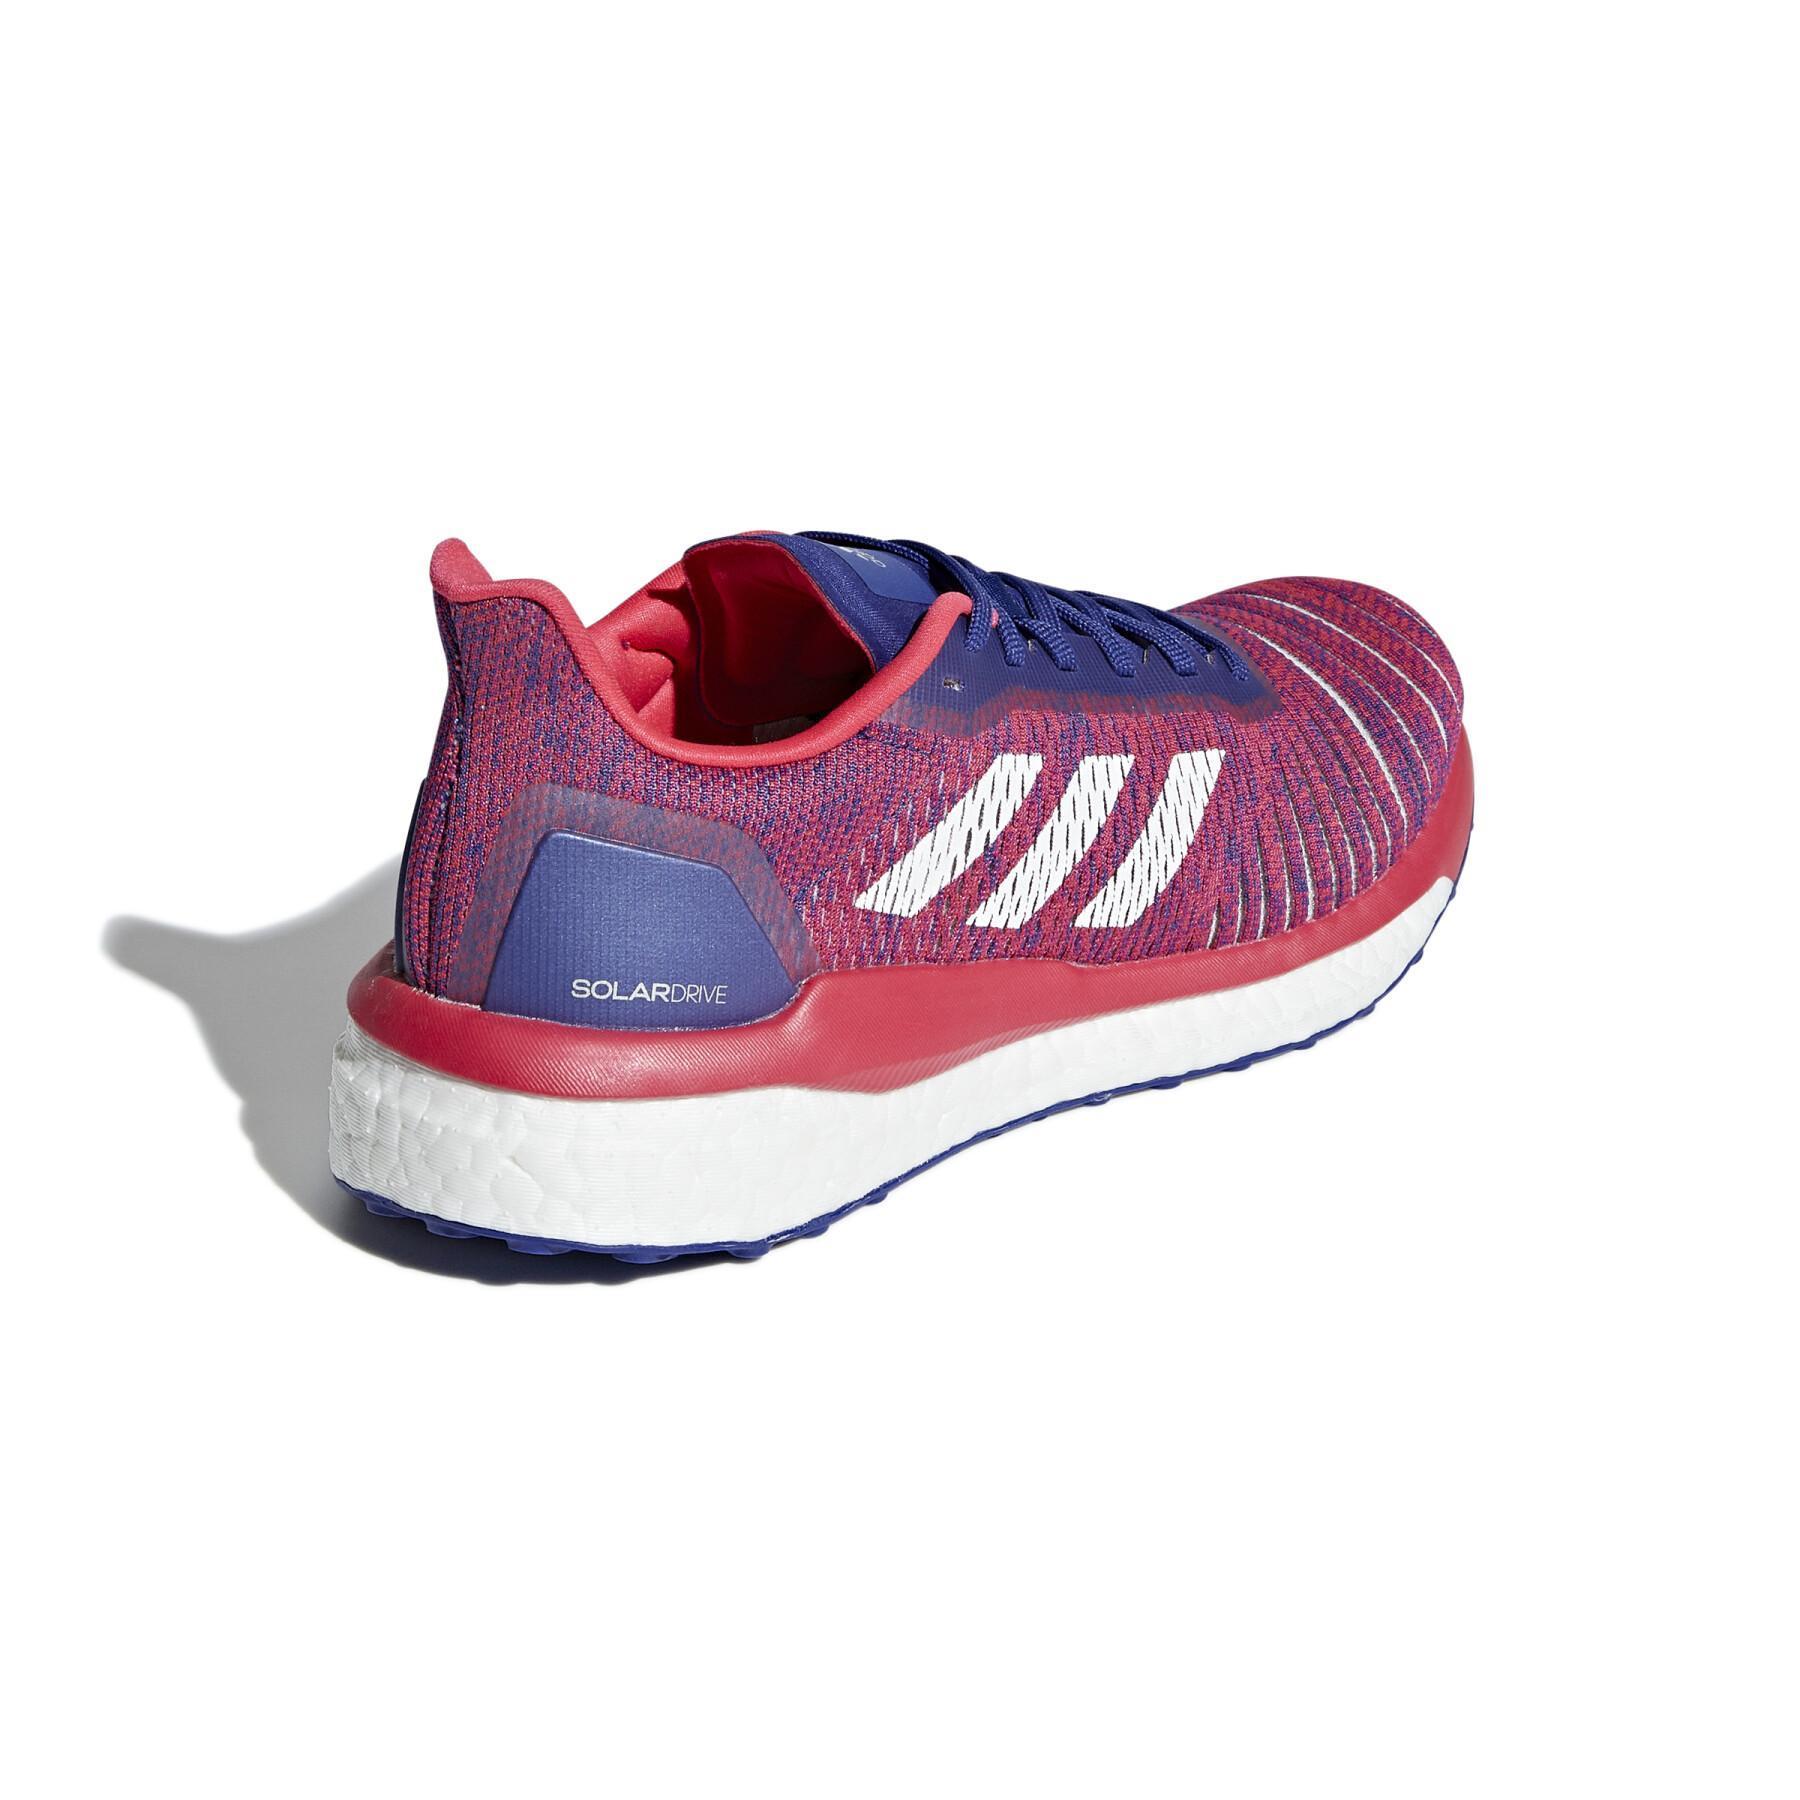 Women's shoes adidas Solardrive